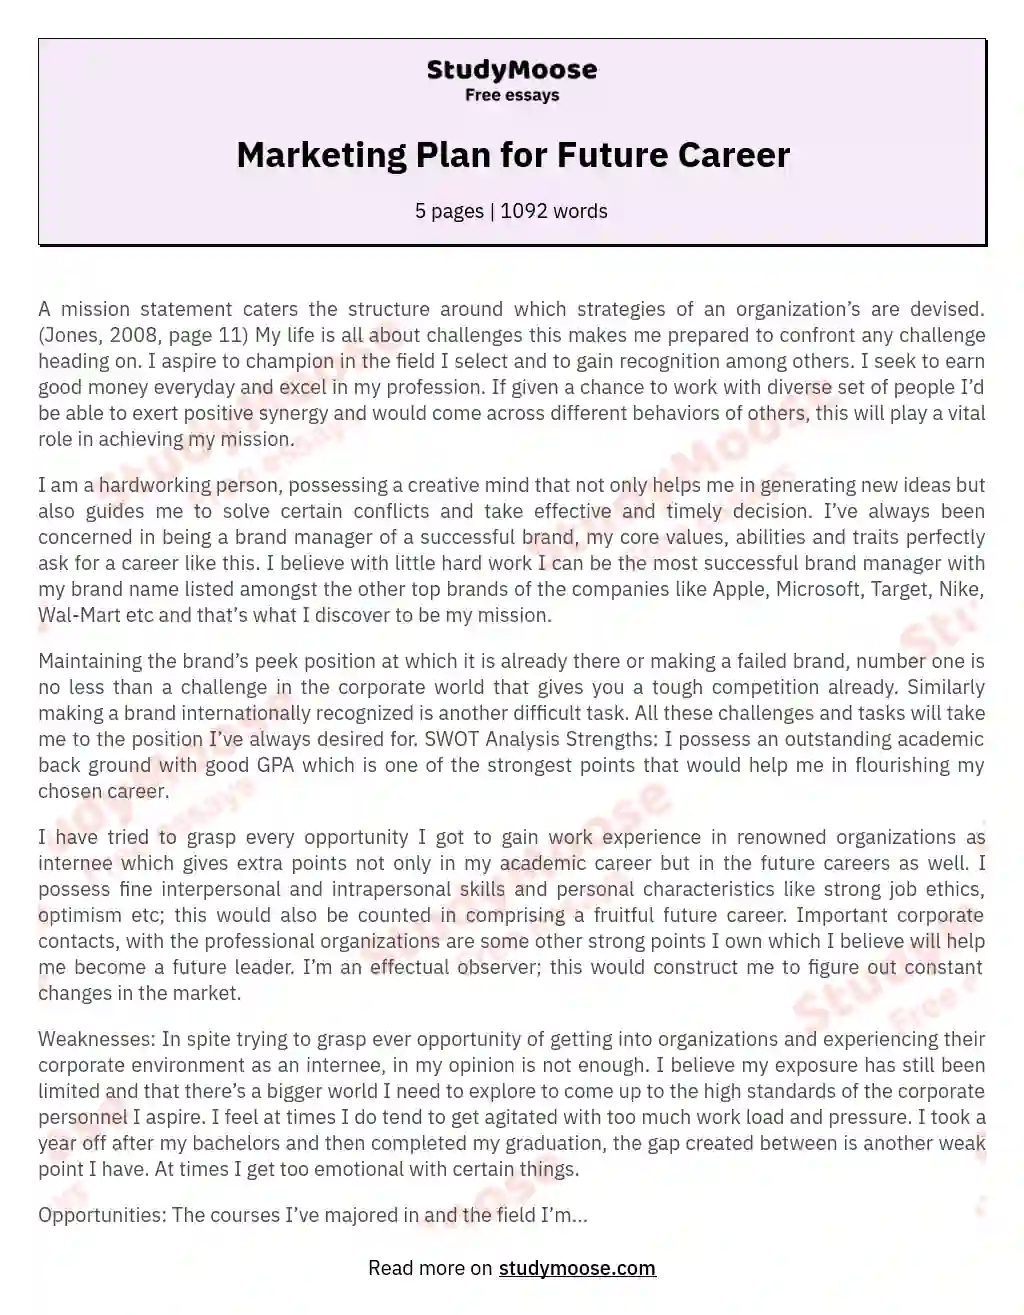 Marketing Plan for Future Career essay